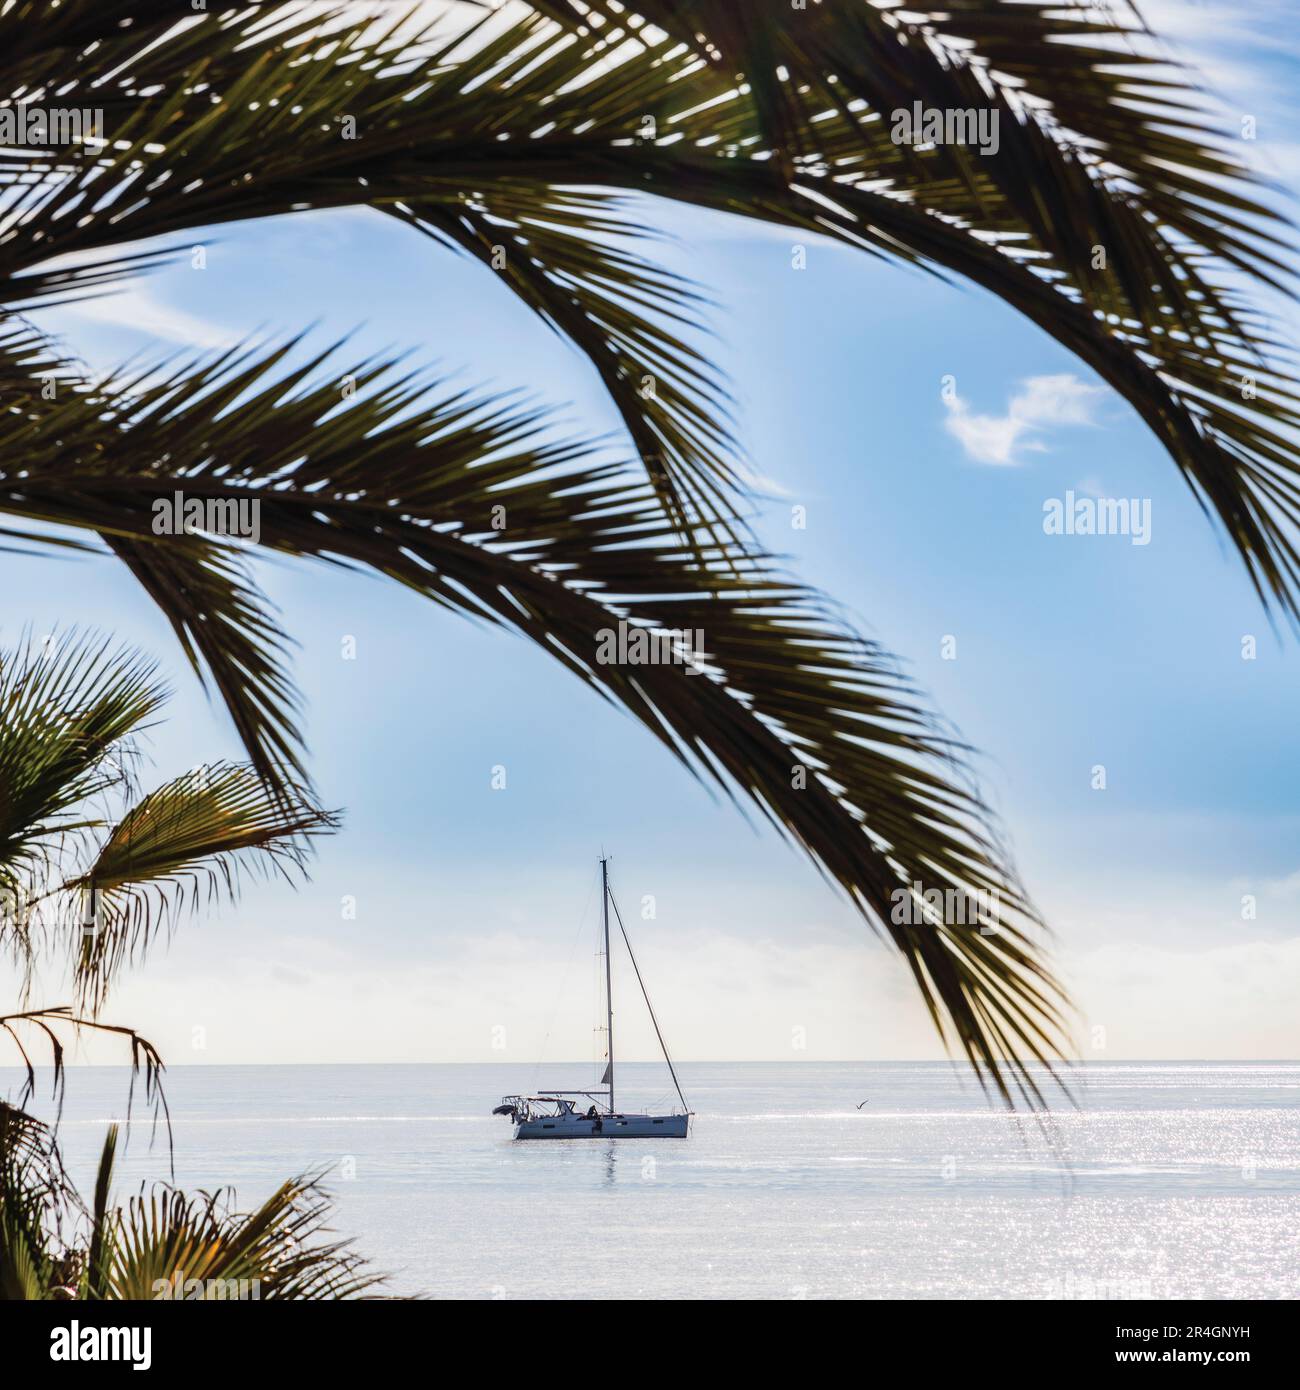 Yacht and palm fronds, Marbella, Costa del Sol, Malaga Province, Spain. Stock Photo